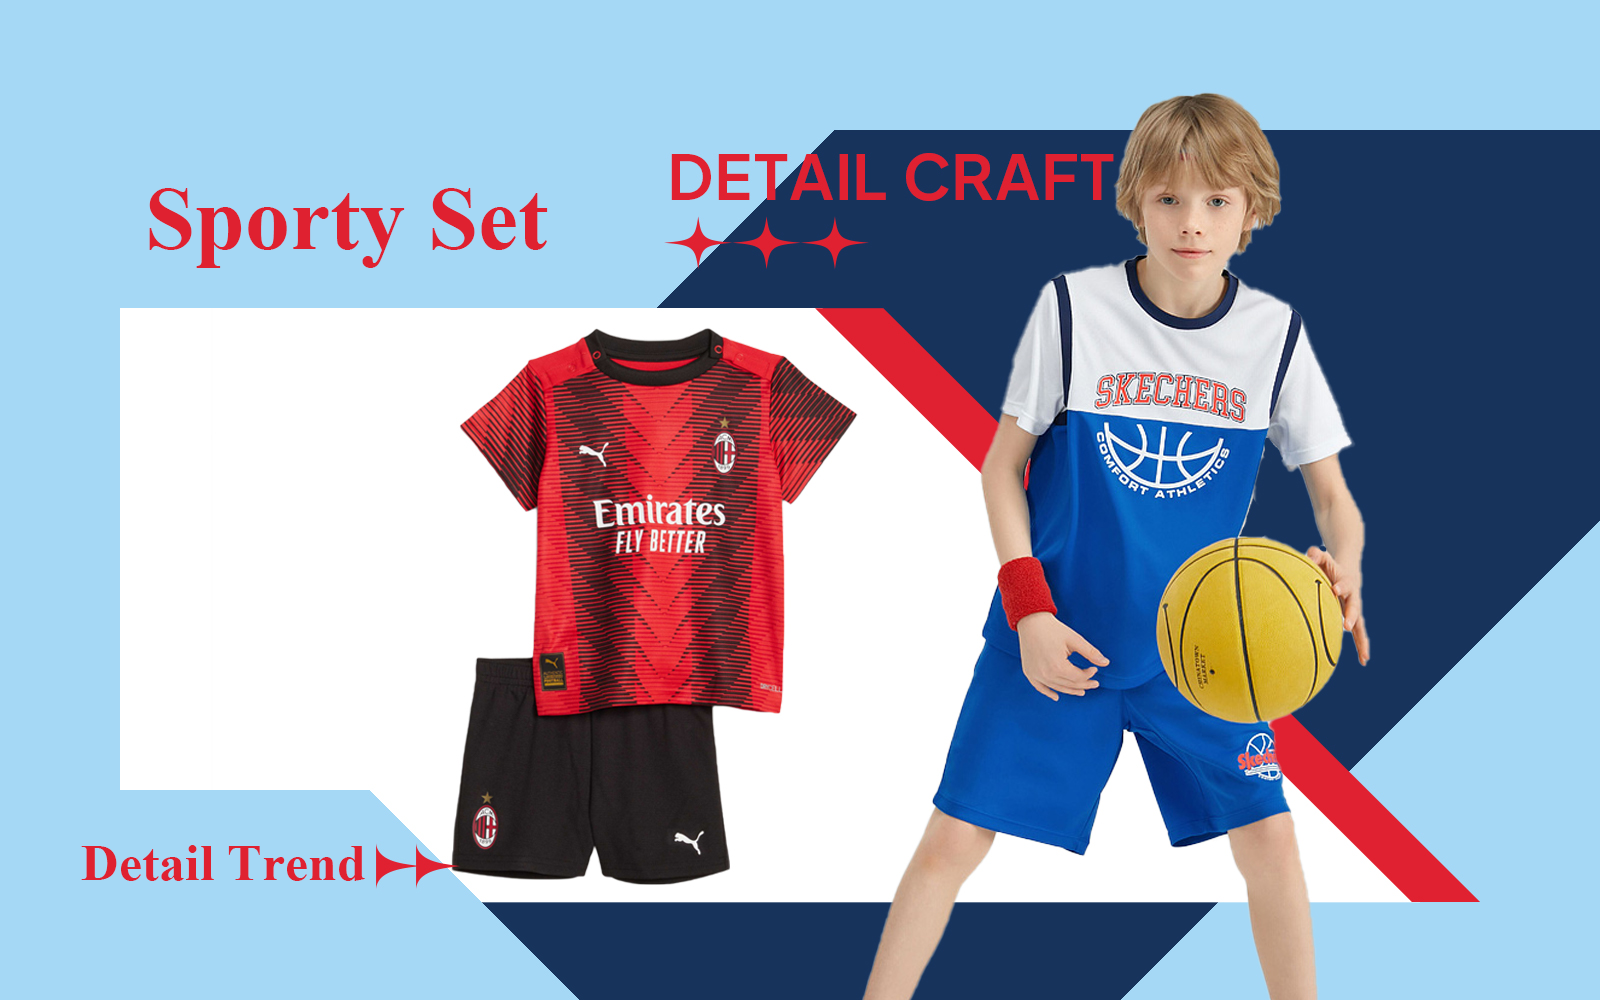 Sporty Set -- The Detail & Craft for Boyswear